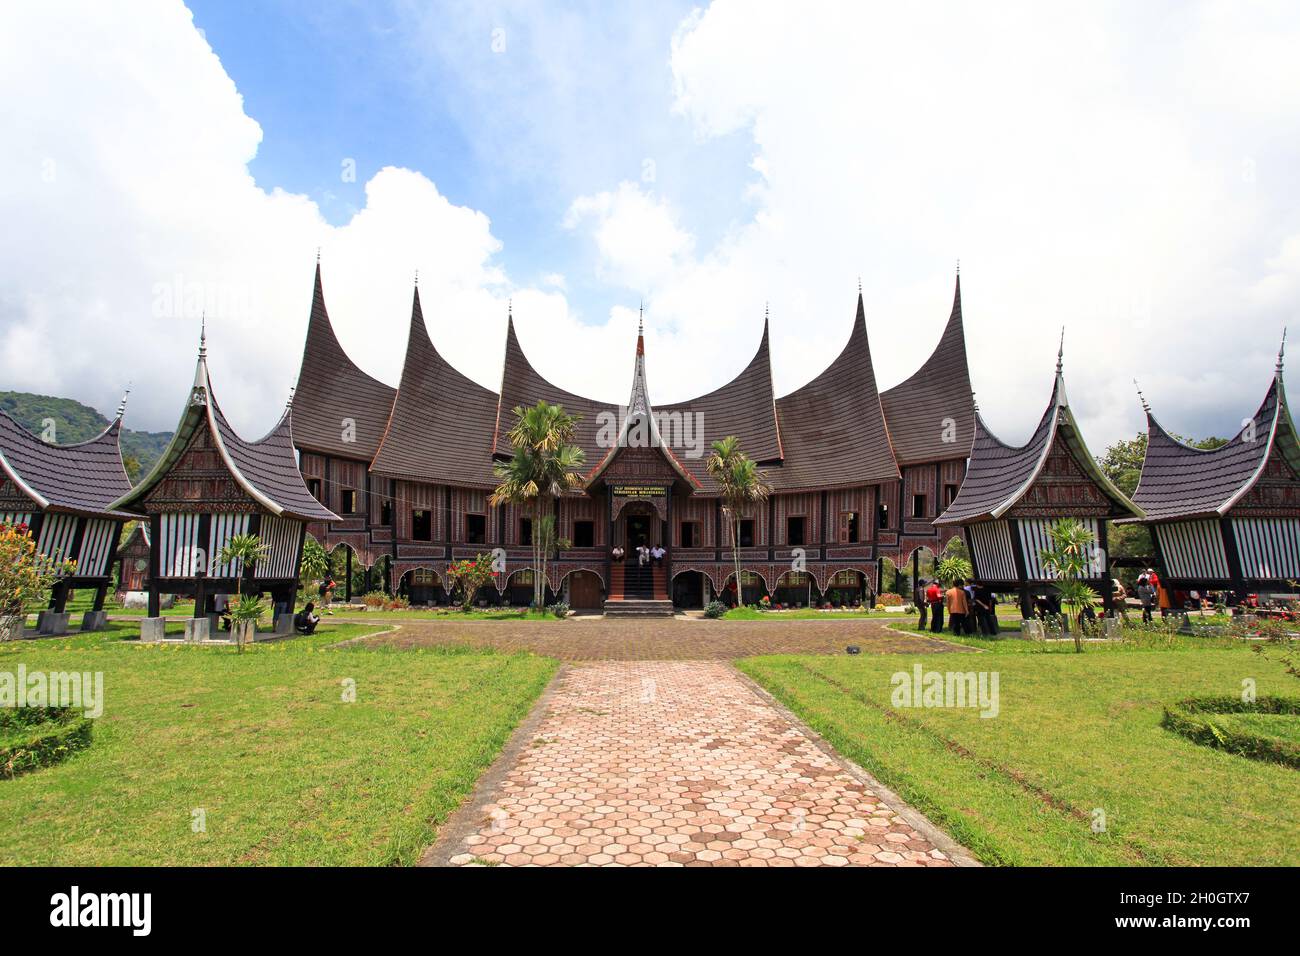 The Minangkabau Culture Documentation and Information Center in Padang Panjang, West Sumatra, Indonesia. Stock Photo